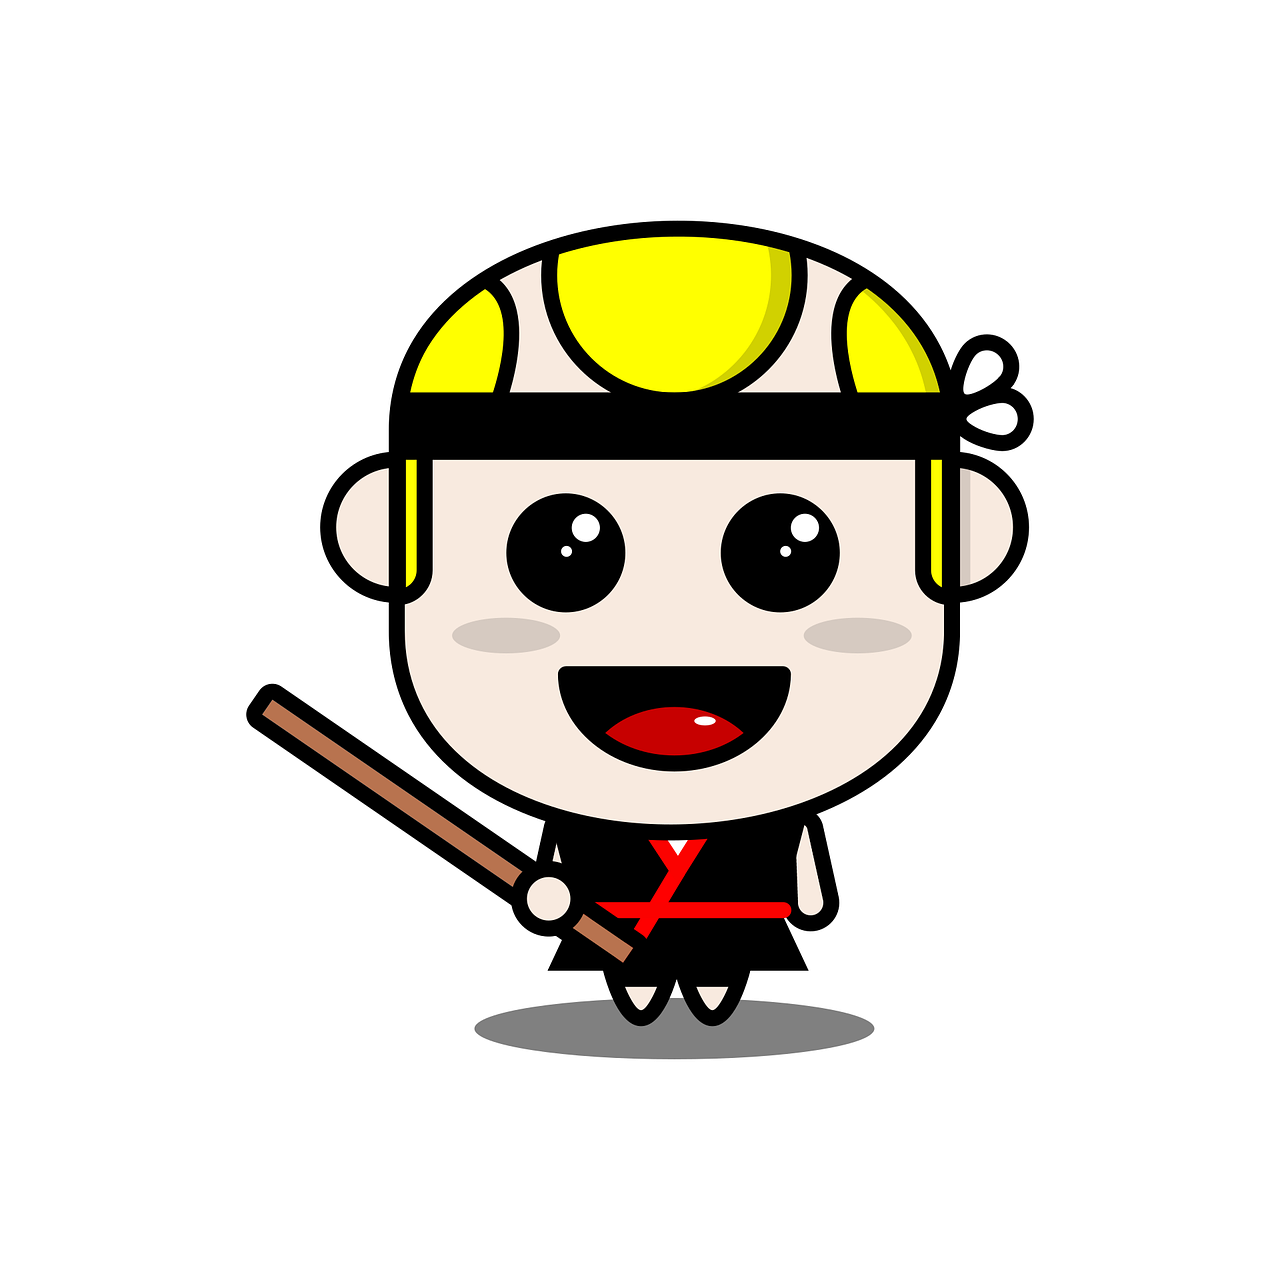 a cartoon character holding a baseball bat, inspired by Kanbun Master, mingei, cute pocelain doll, white-haired, cartoon style illustration, fireman